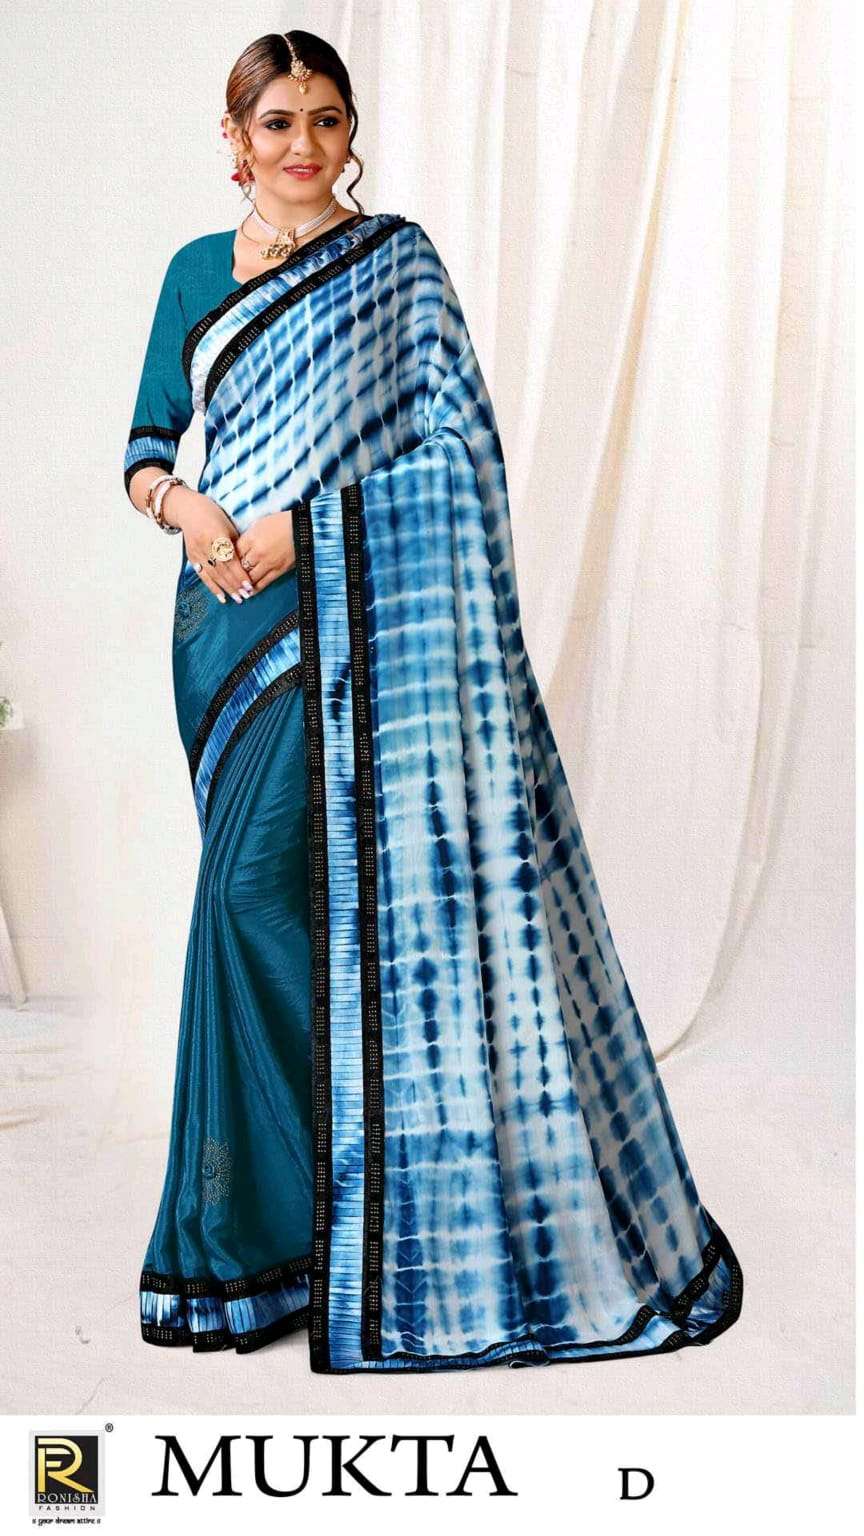 Mukta by ranjna saree bollywood style designer saree collection 